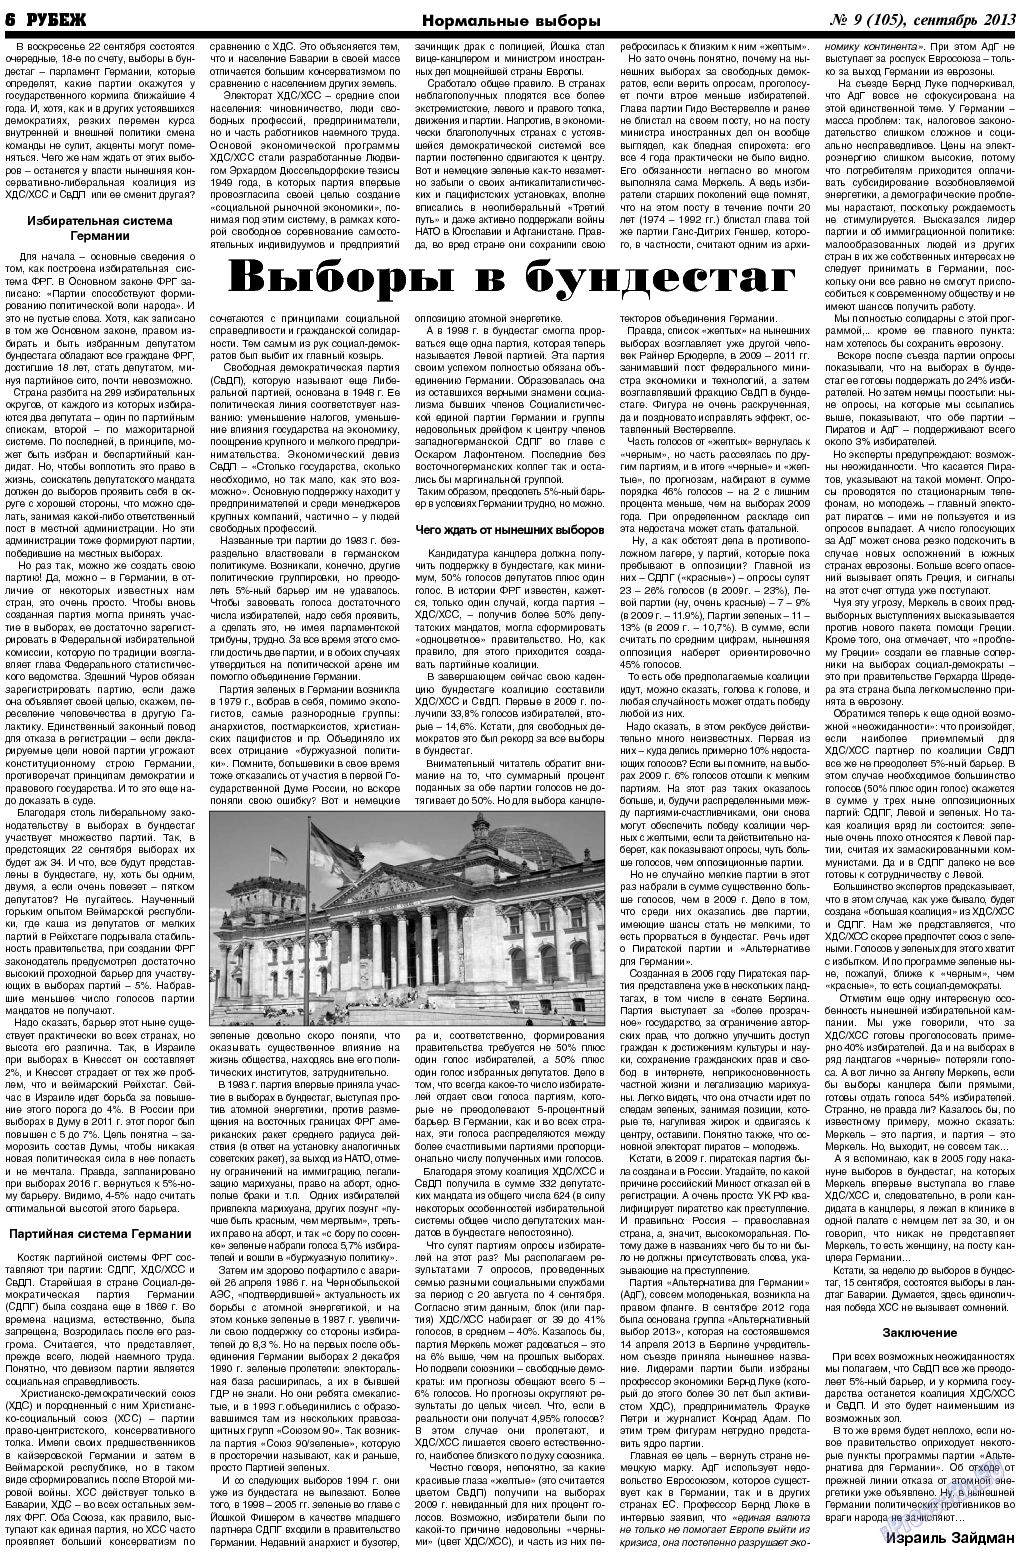 Рубеж, газета. 2013 №9 стр.6